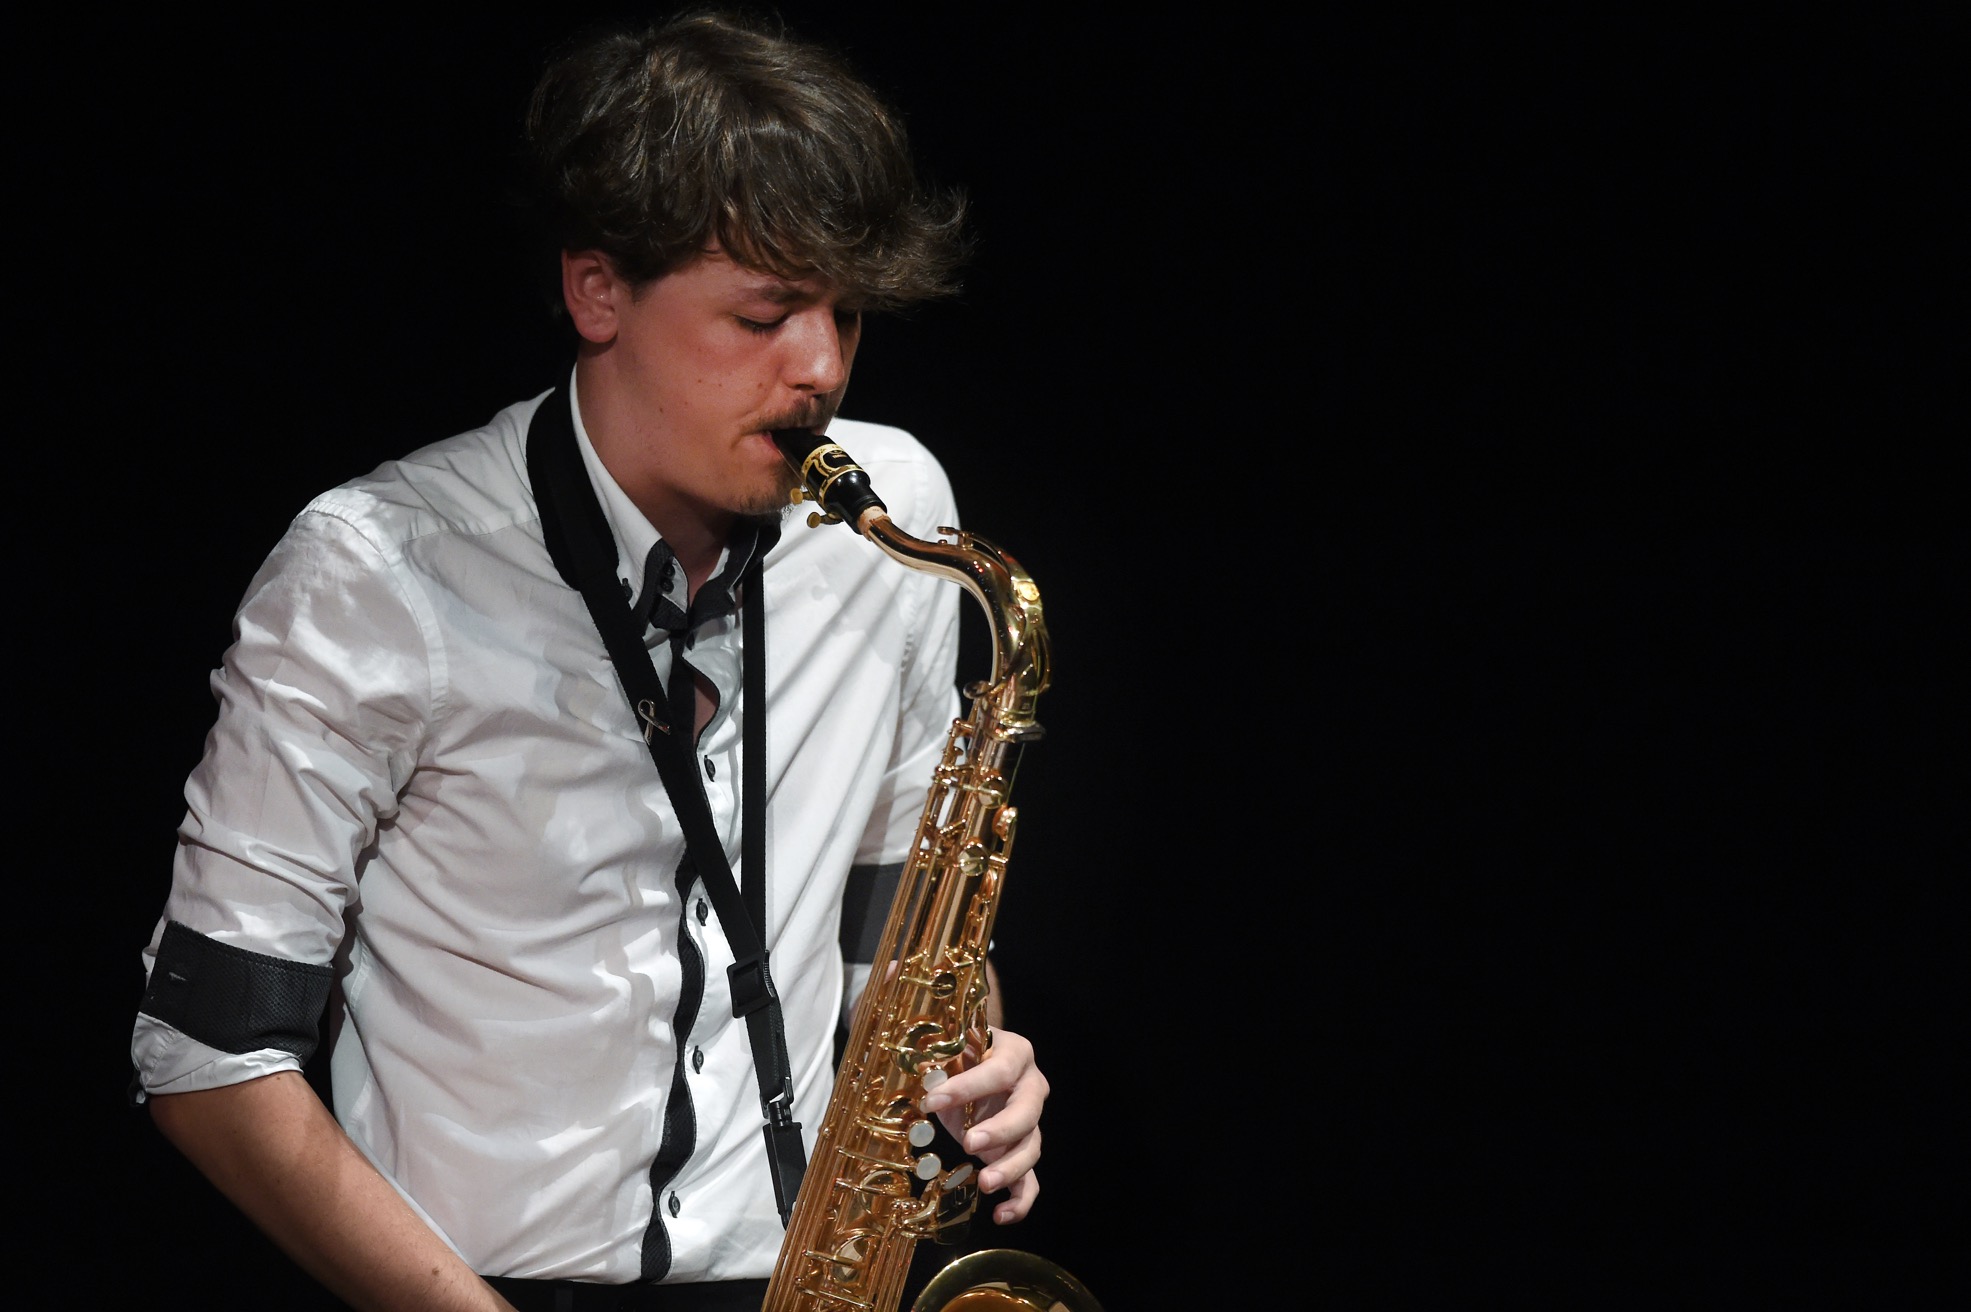 Saxophone solo from Jack Schendel at Edinburgh Jazz & Blues Festival hub venue, Teviot Row, 22 July 2018